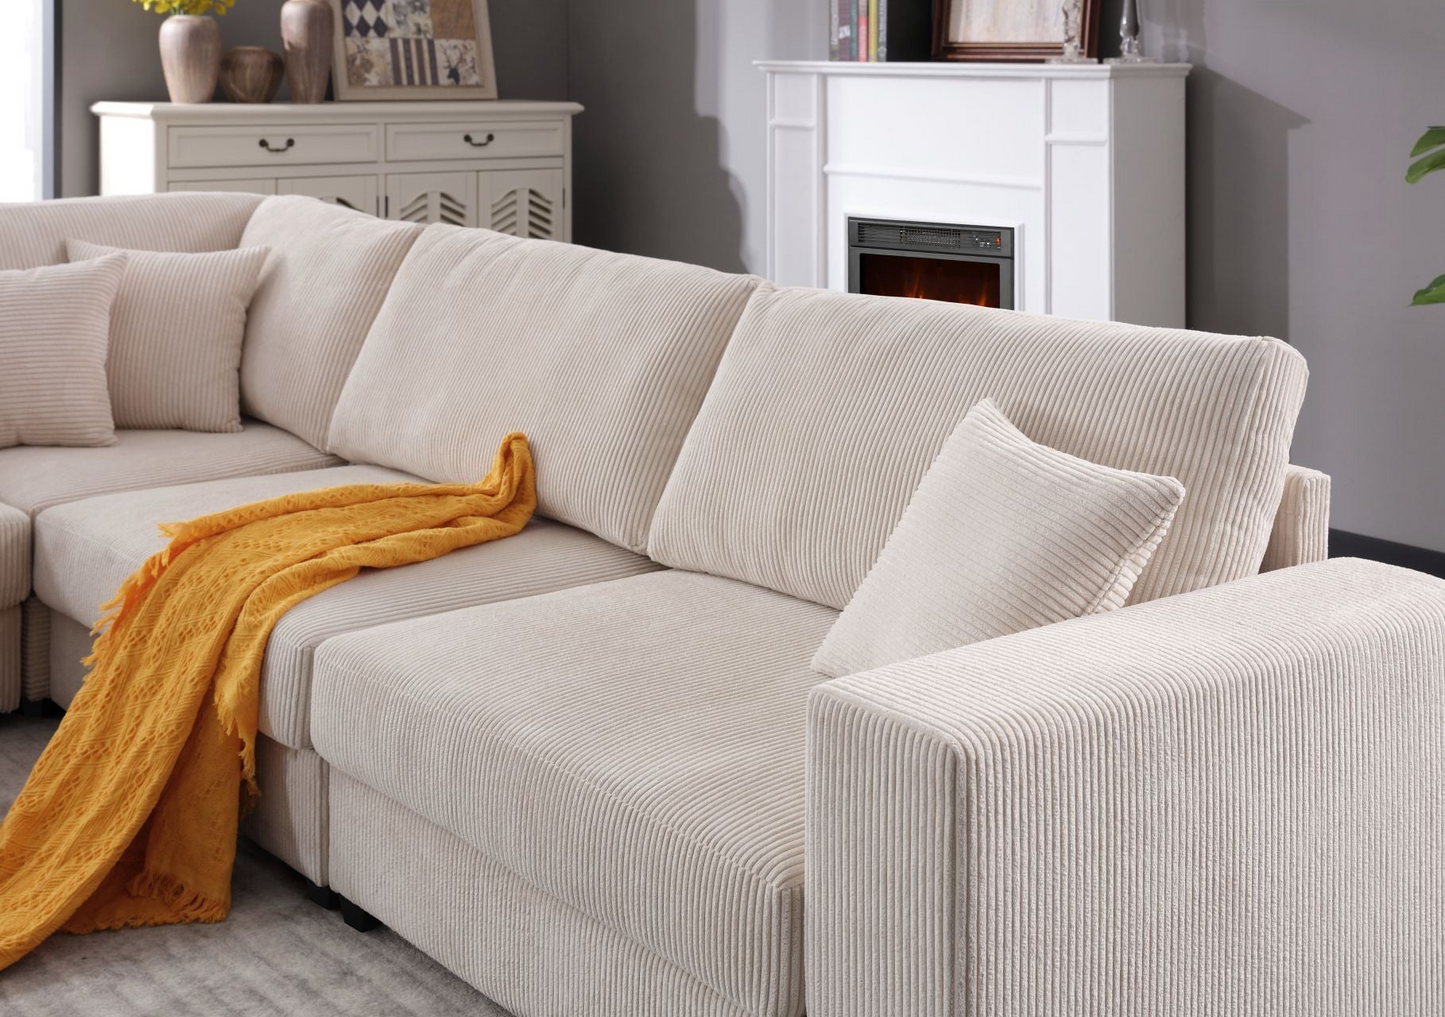 Oversized Modular Sectional Sofa Set,Corduroy Upholstered Deep Seat Comfy Sofa   Beige, Goodies N Stuff